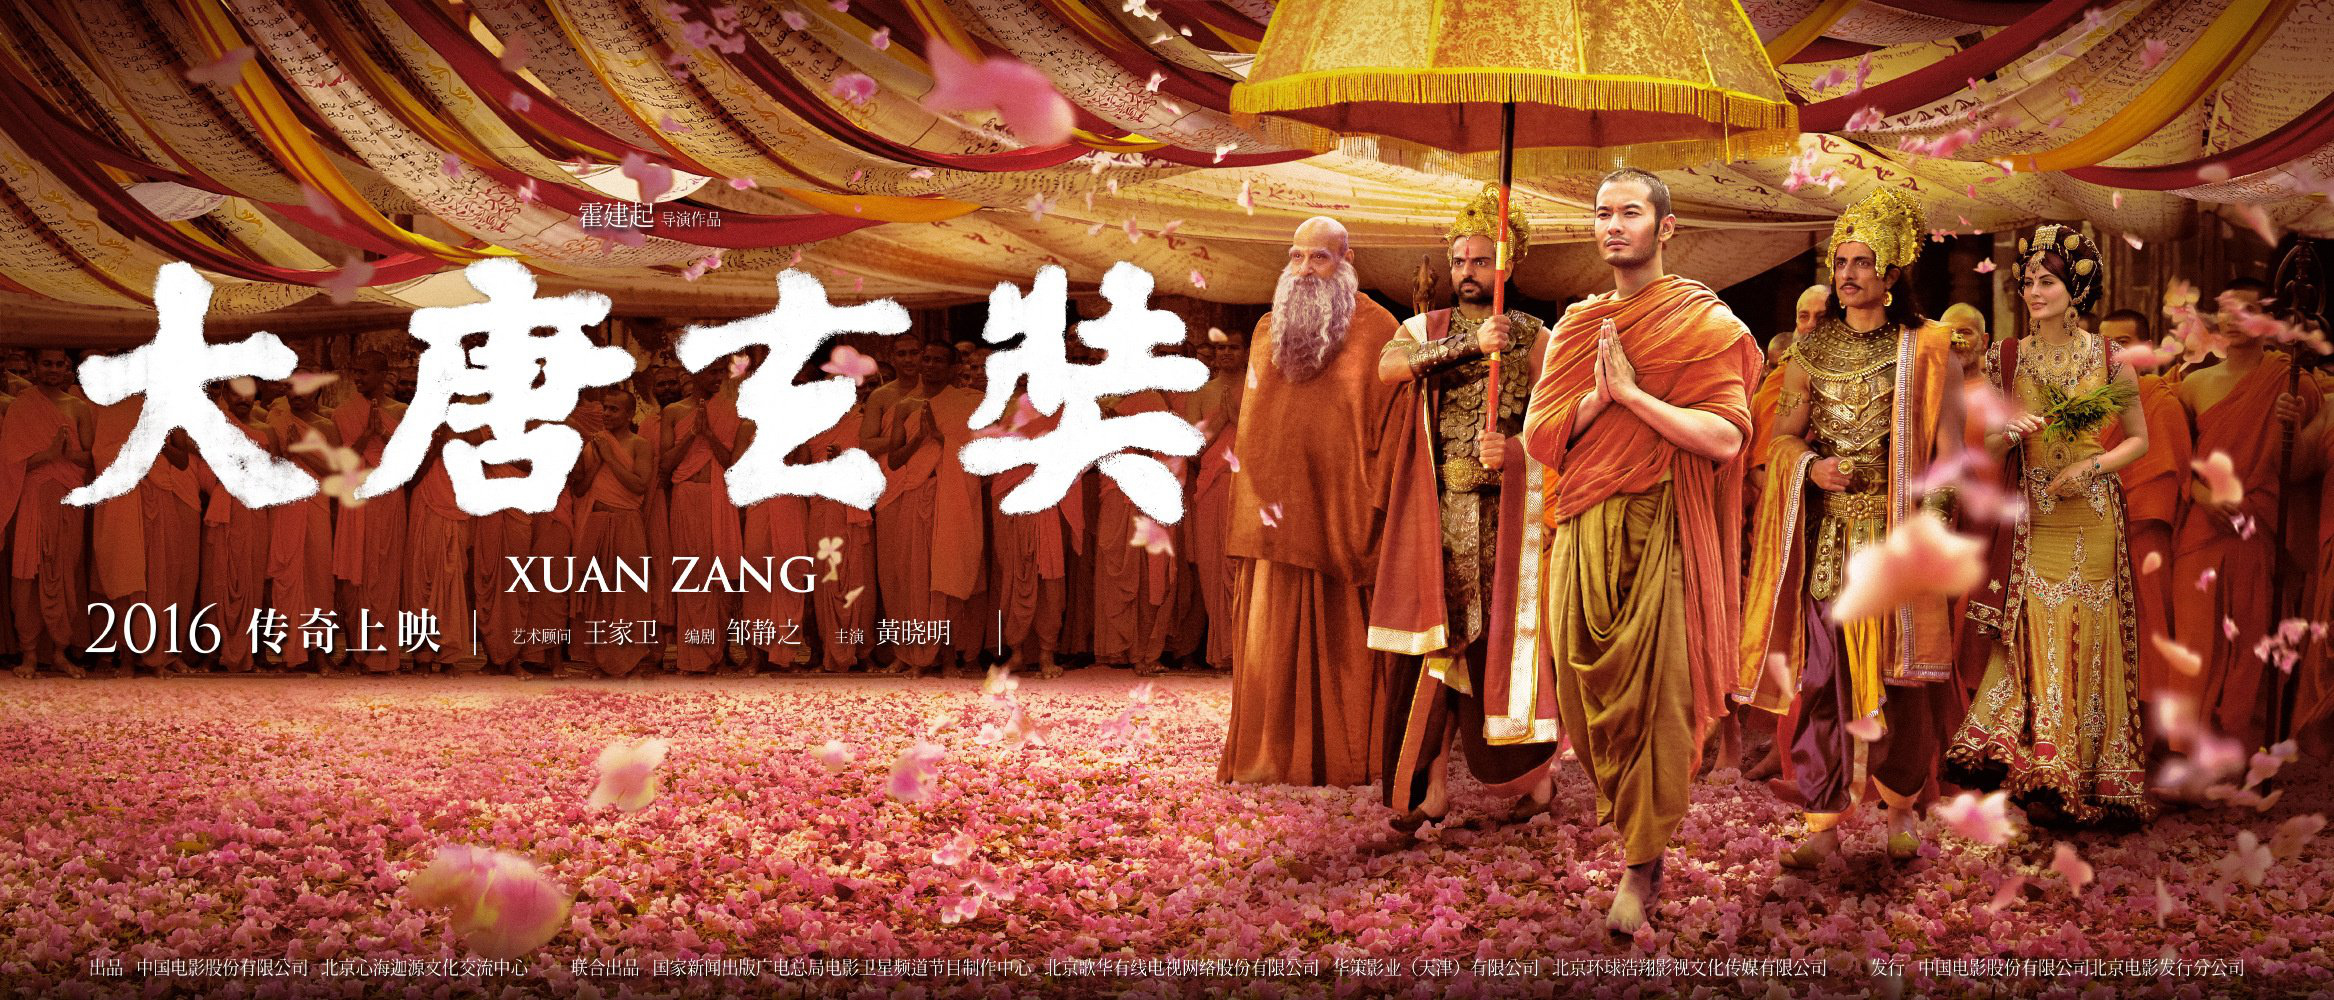 Xuan Zang Film Poster.jpg